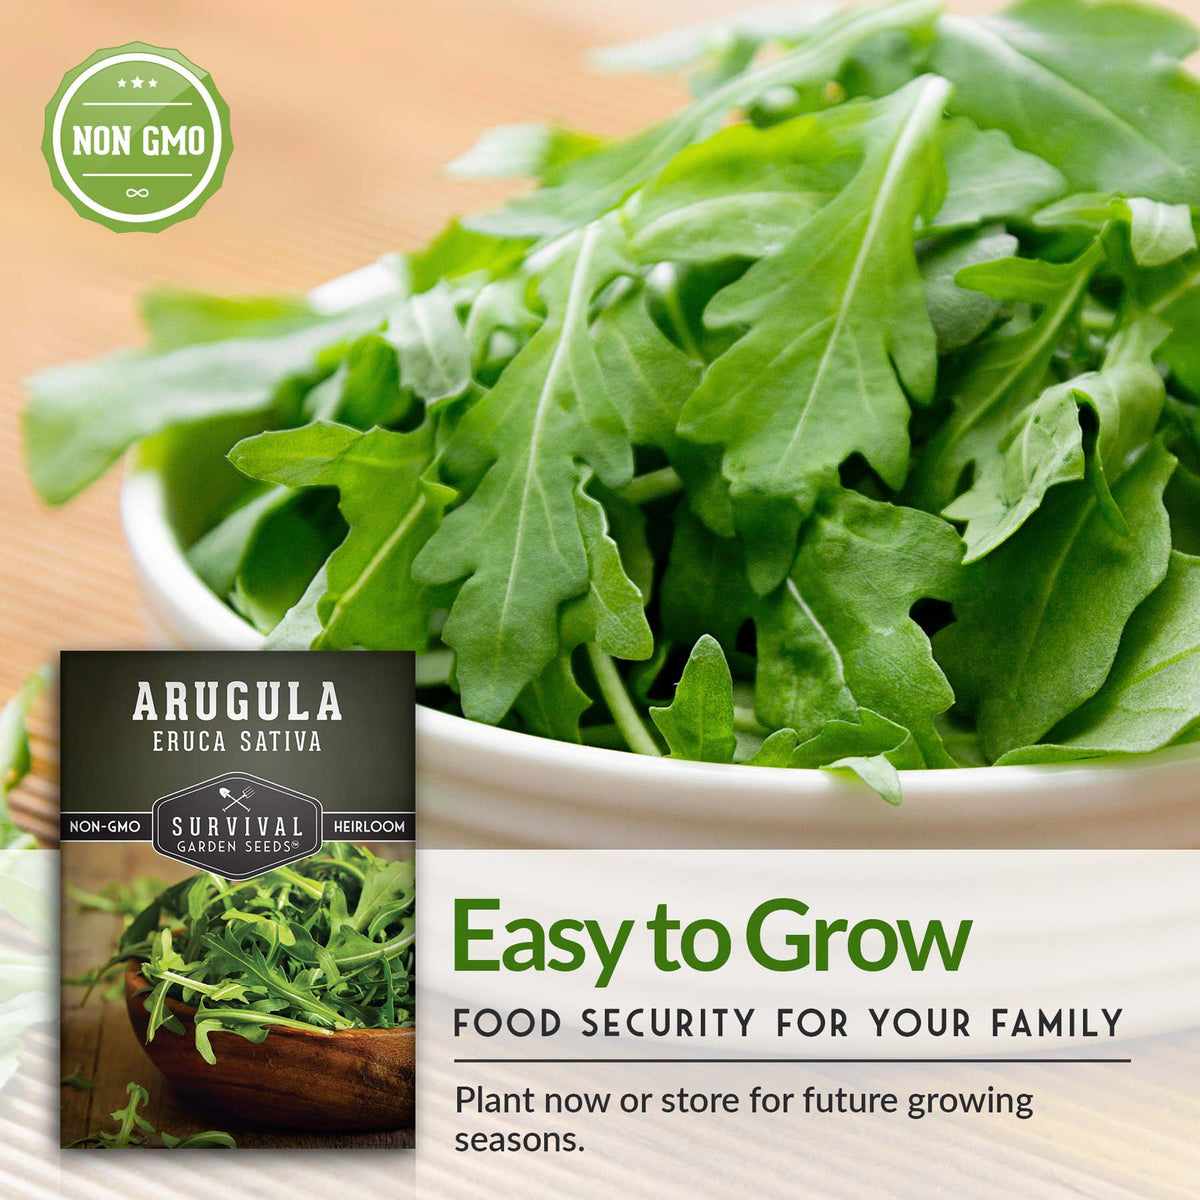 Arugula is easy to grow